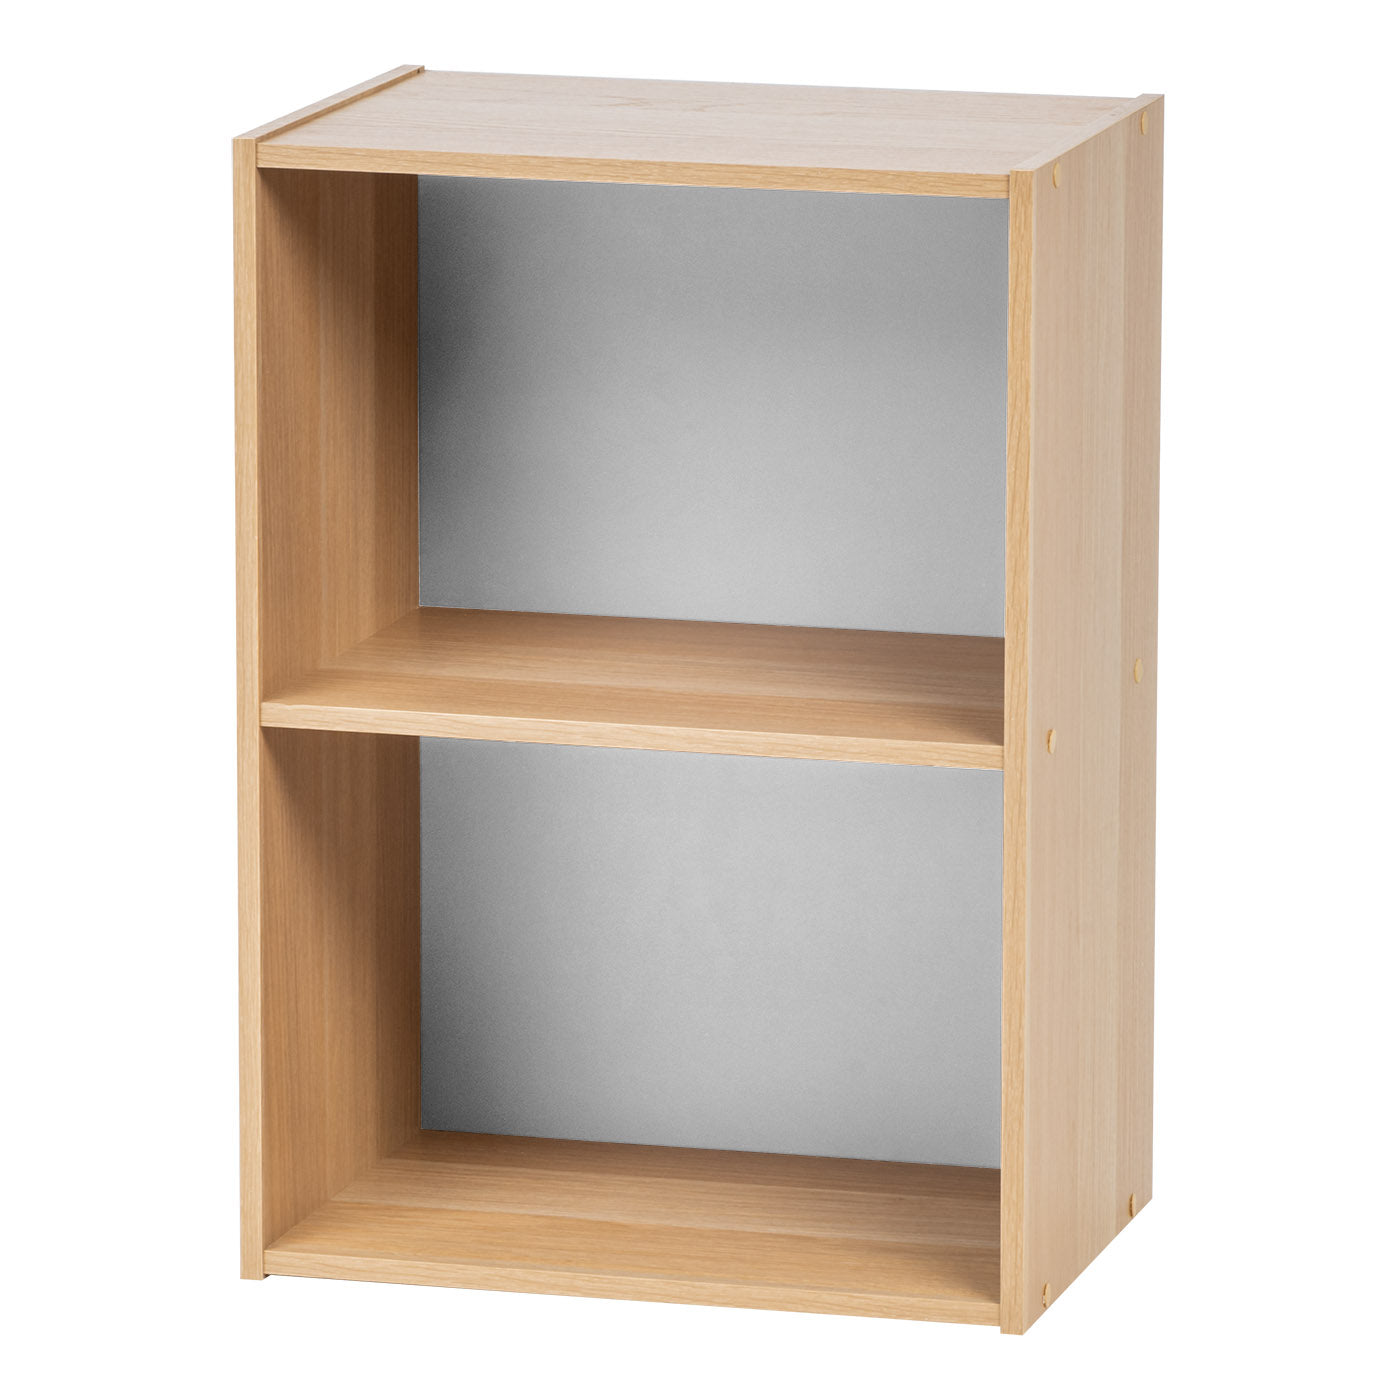 IRIS 38 H 3 Tier Storage Organizer Shelf With Footboard White